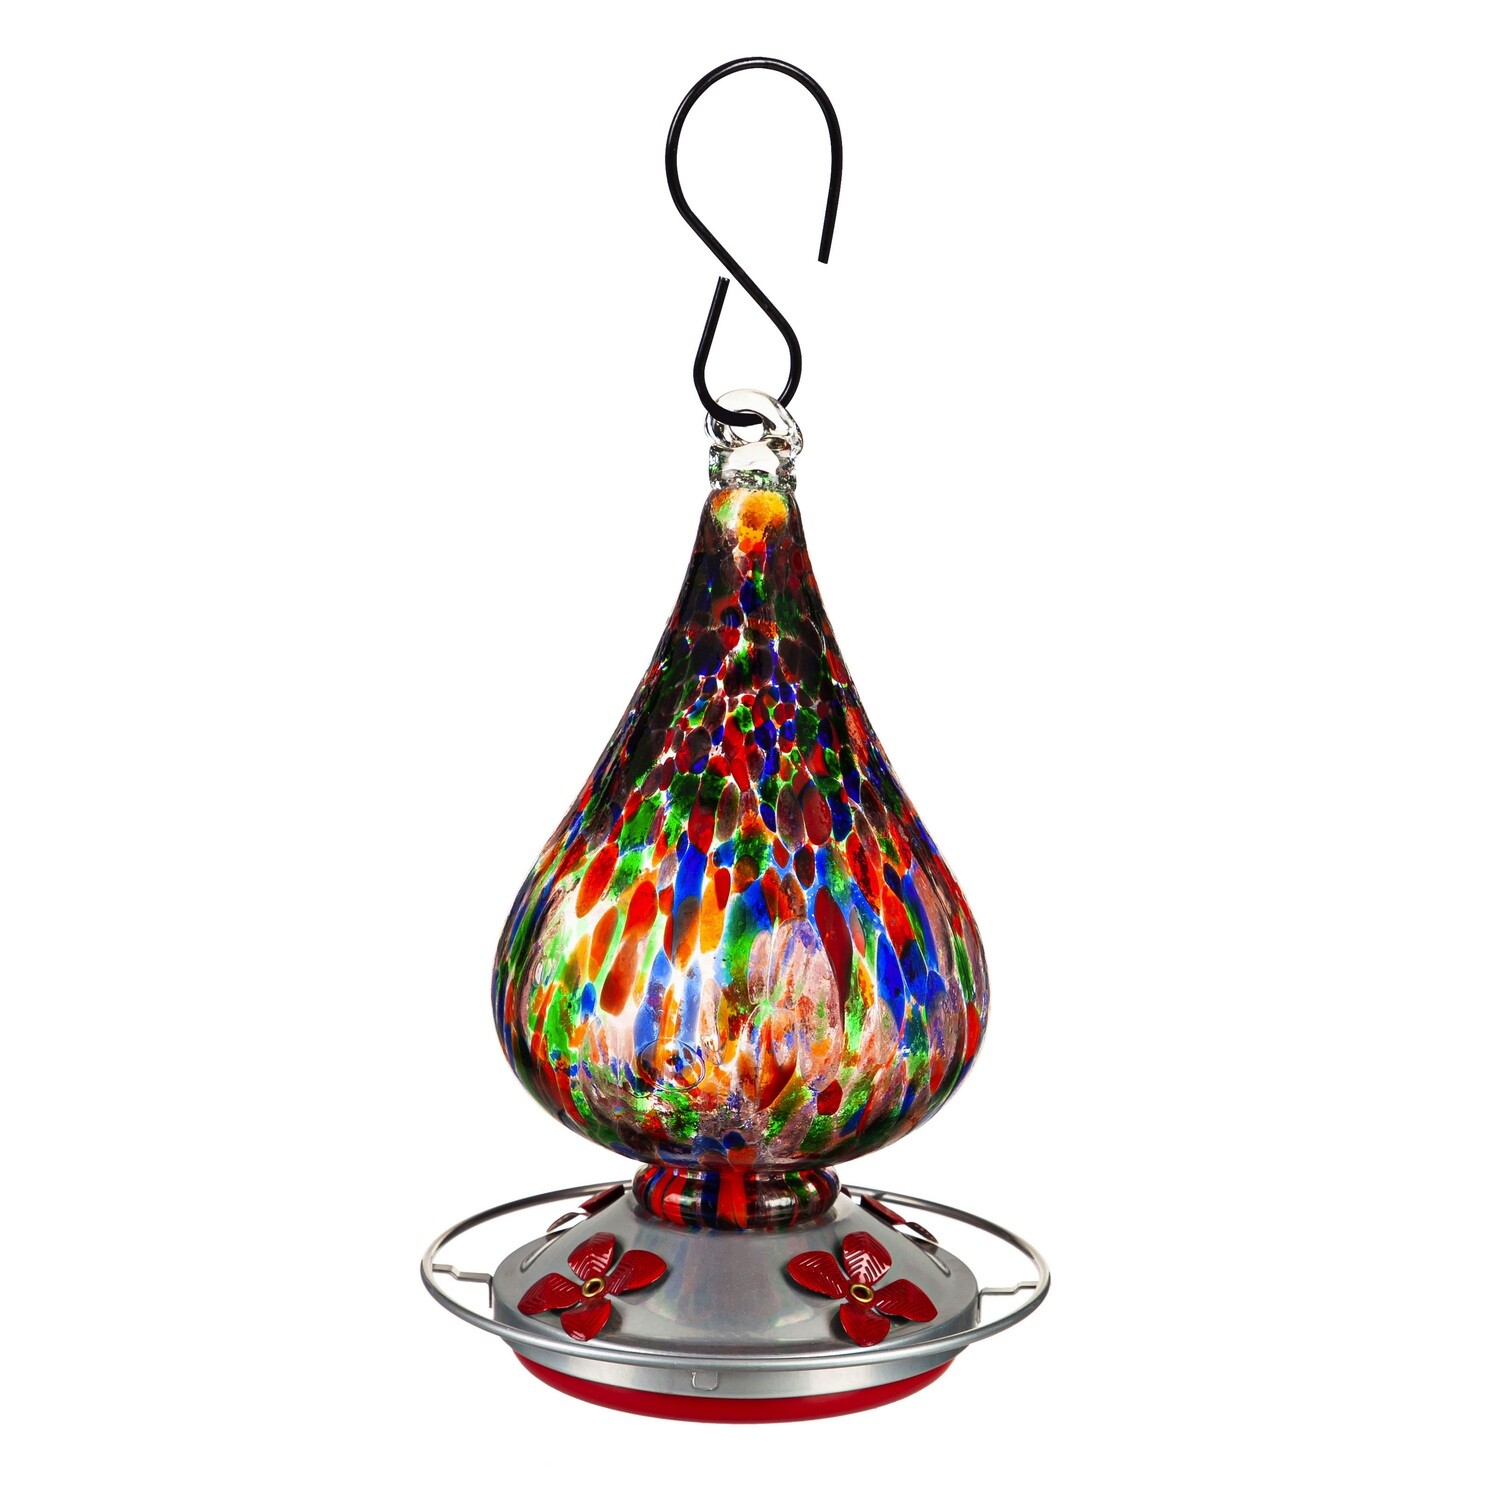 Multi-Color Speckled Art Glass Hummingbird Feeder with Bronze Gondola